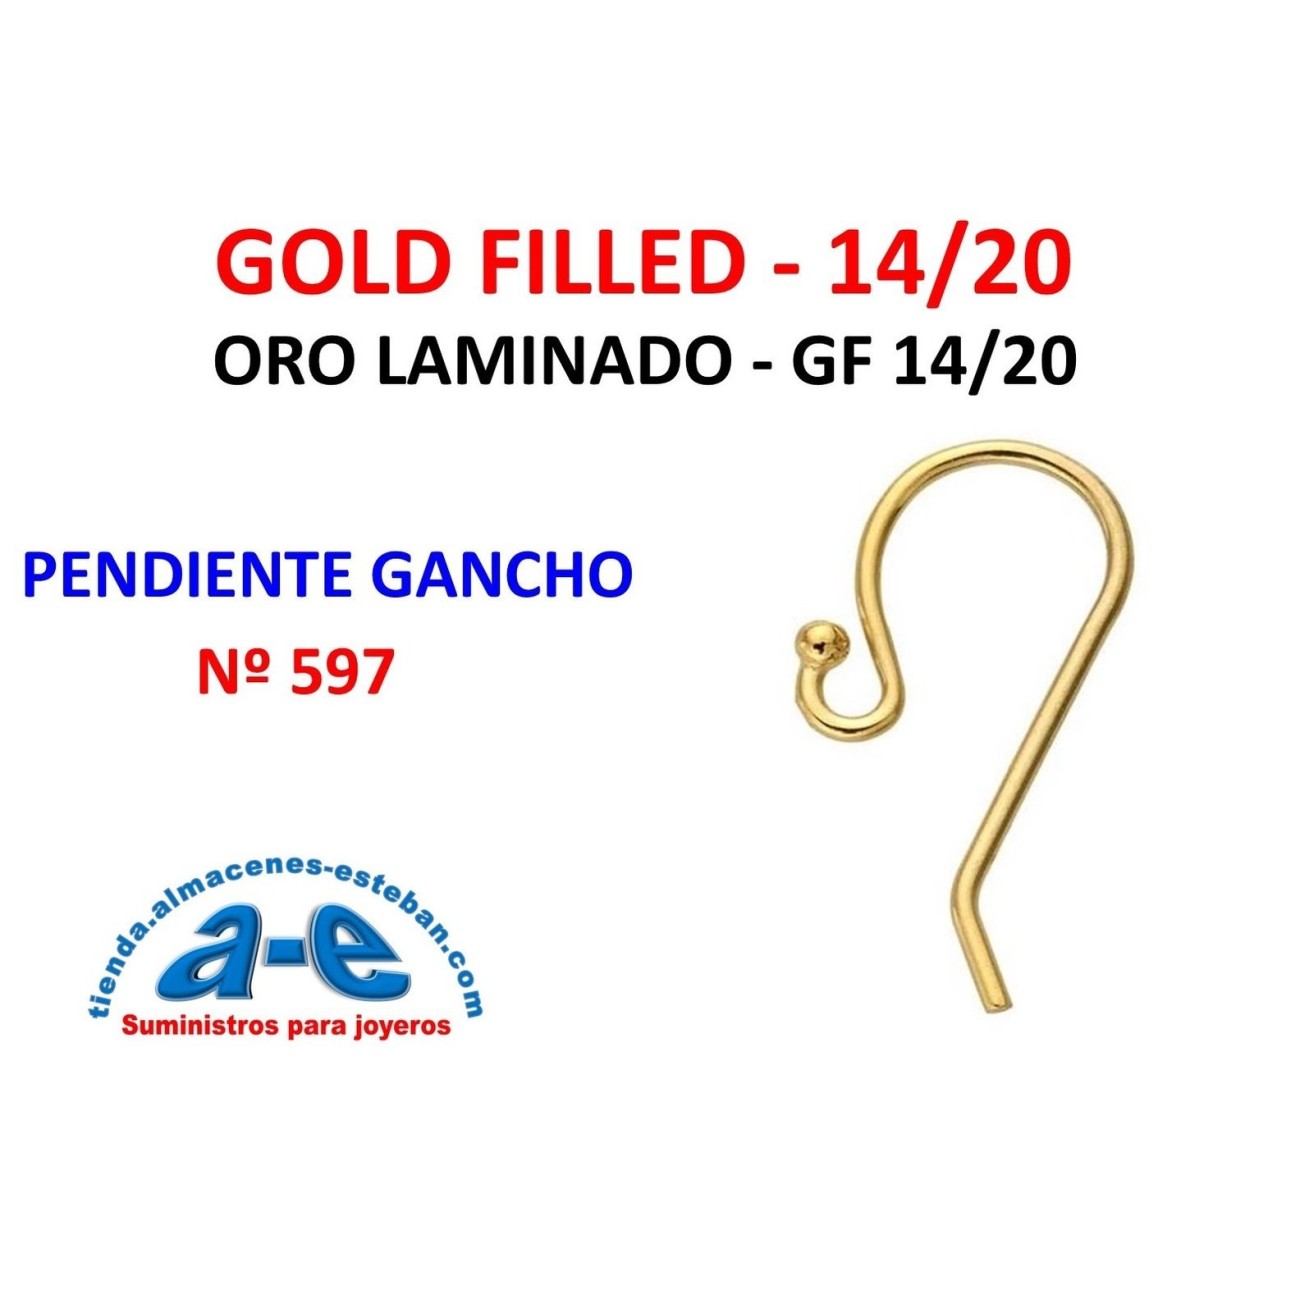 GOLD FILLED PENDIENTE GANCHO 597